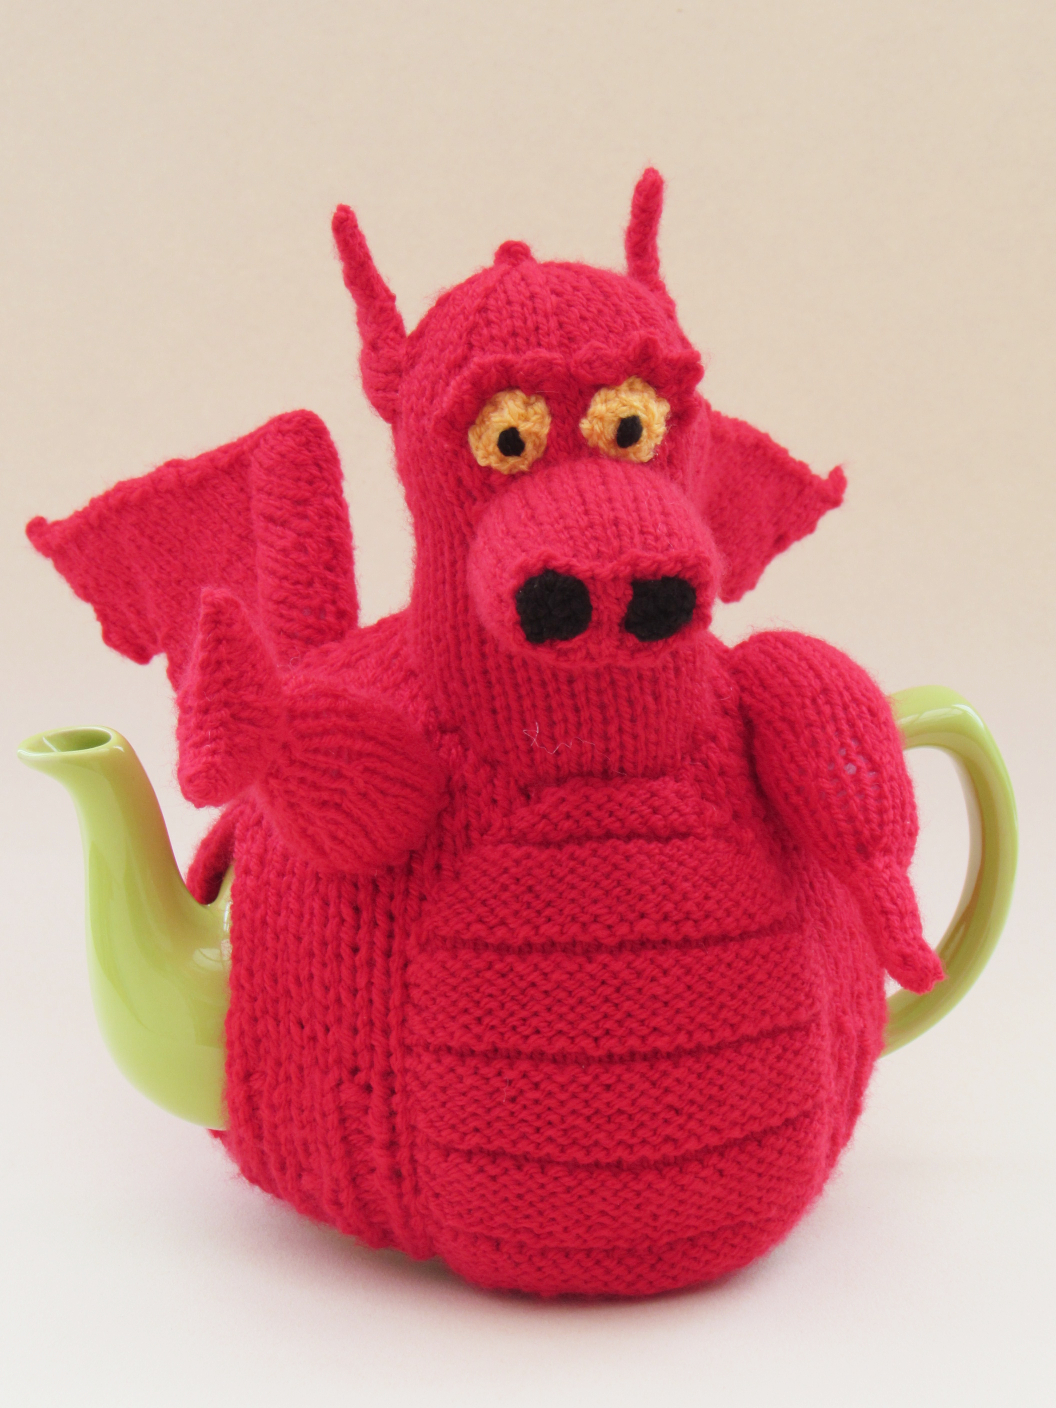 Welsh Dragon knitting pattern